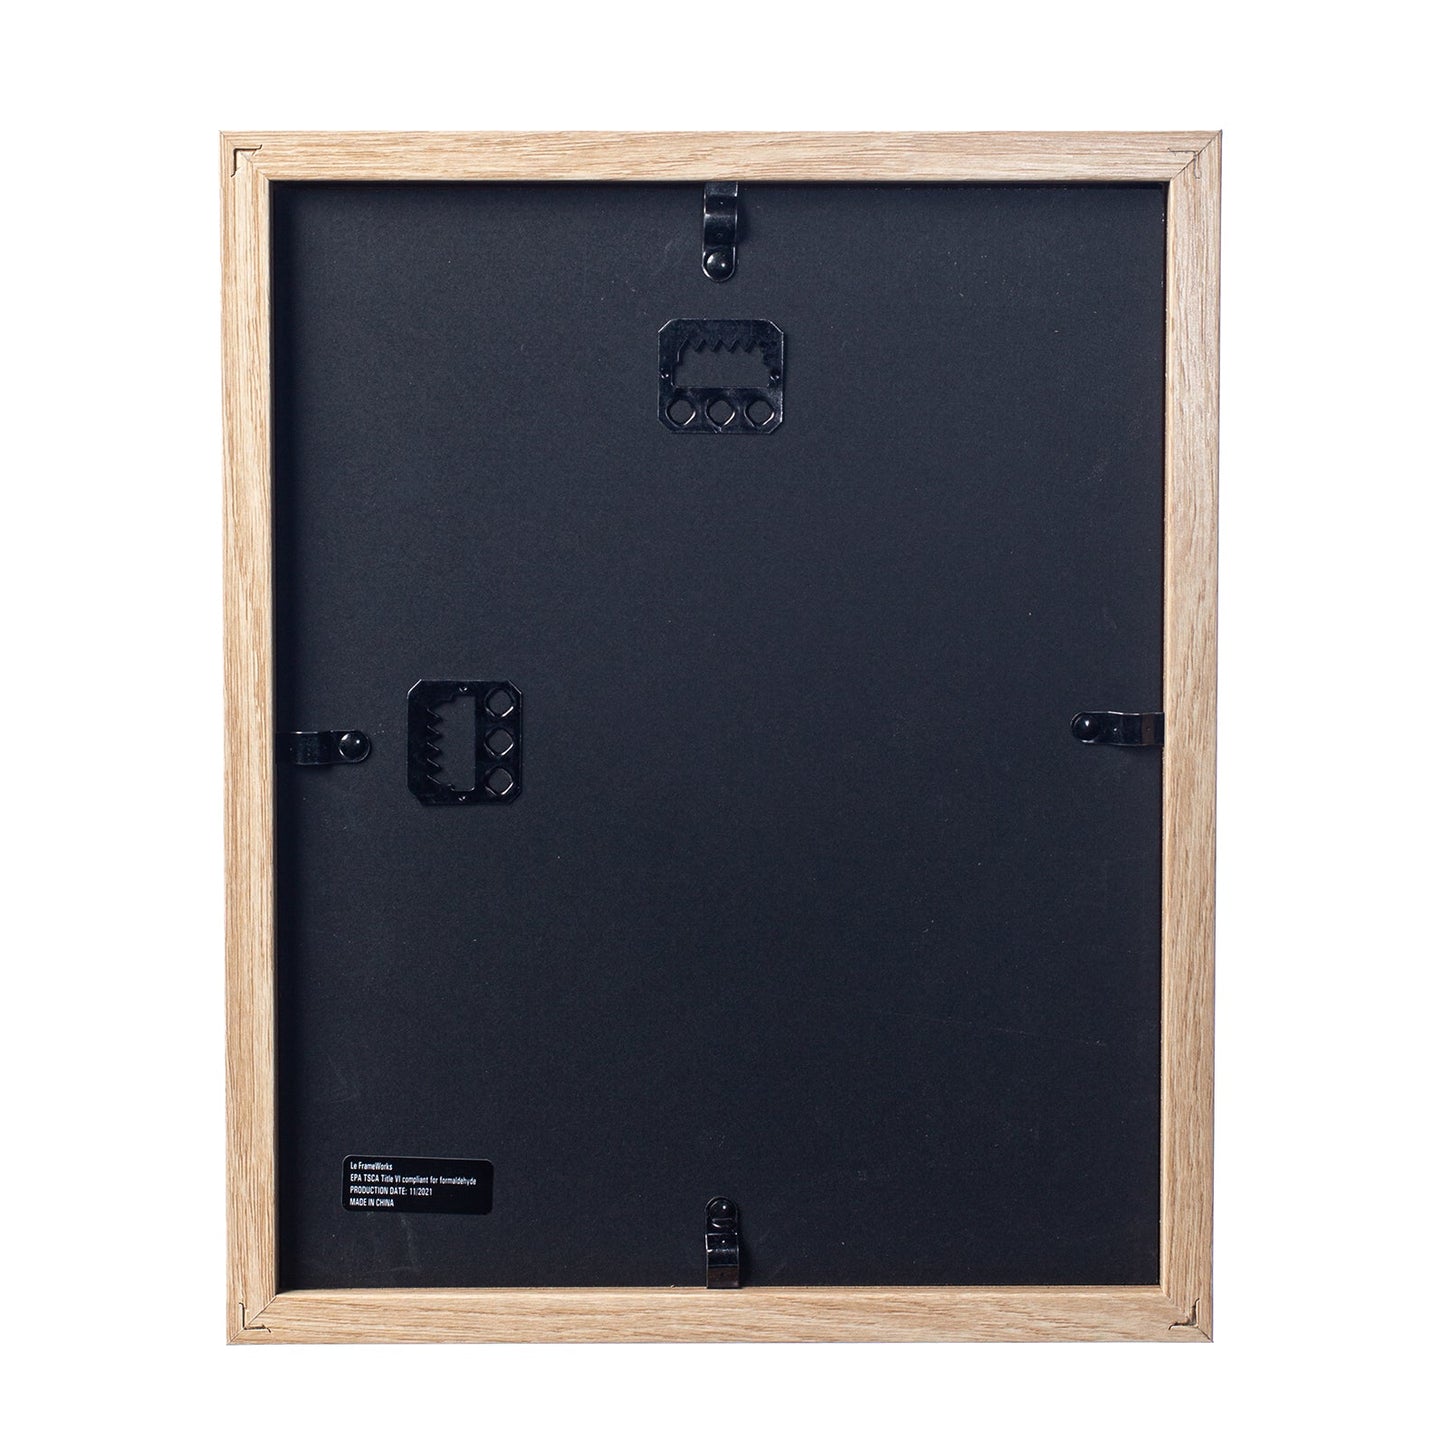 8.5” x 11” Natural Oak Wood Shadow Box Frame